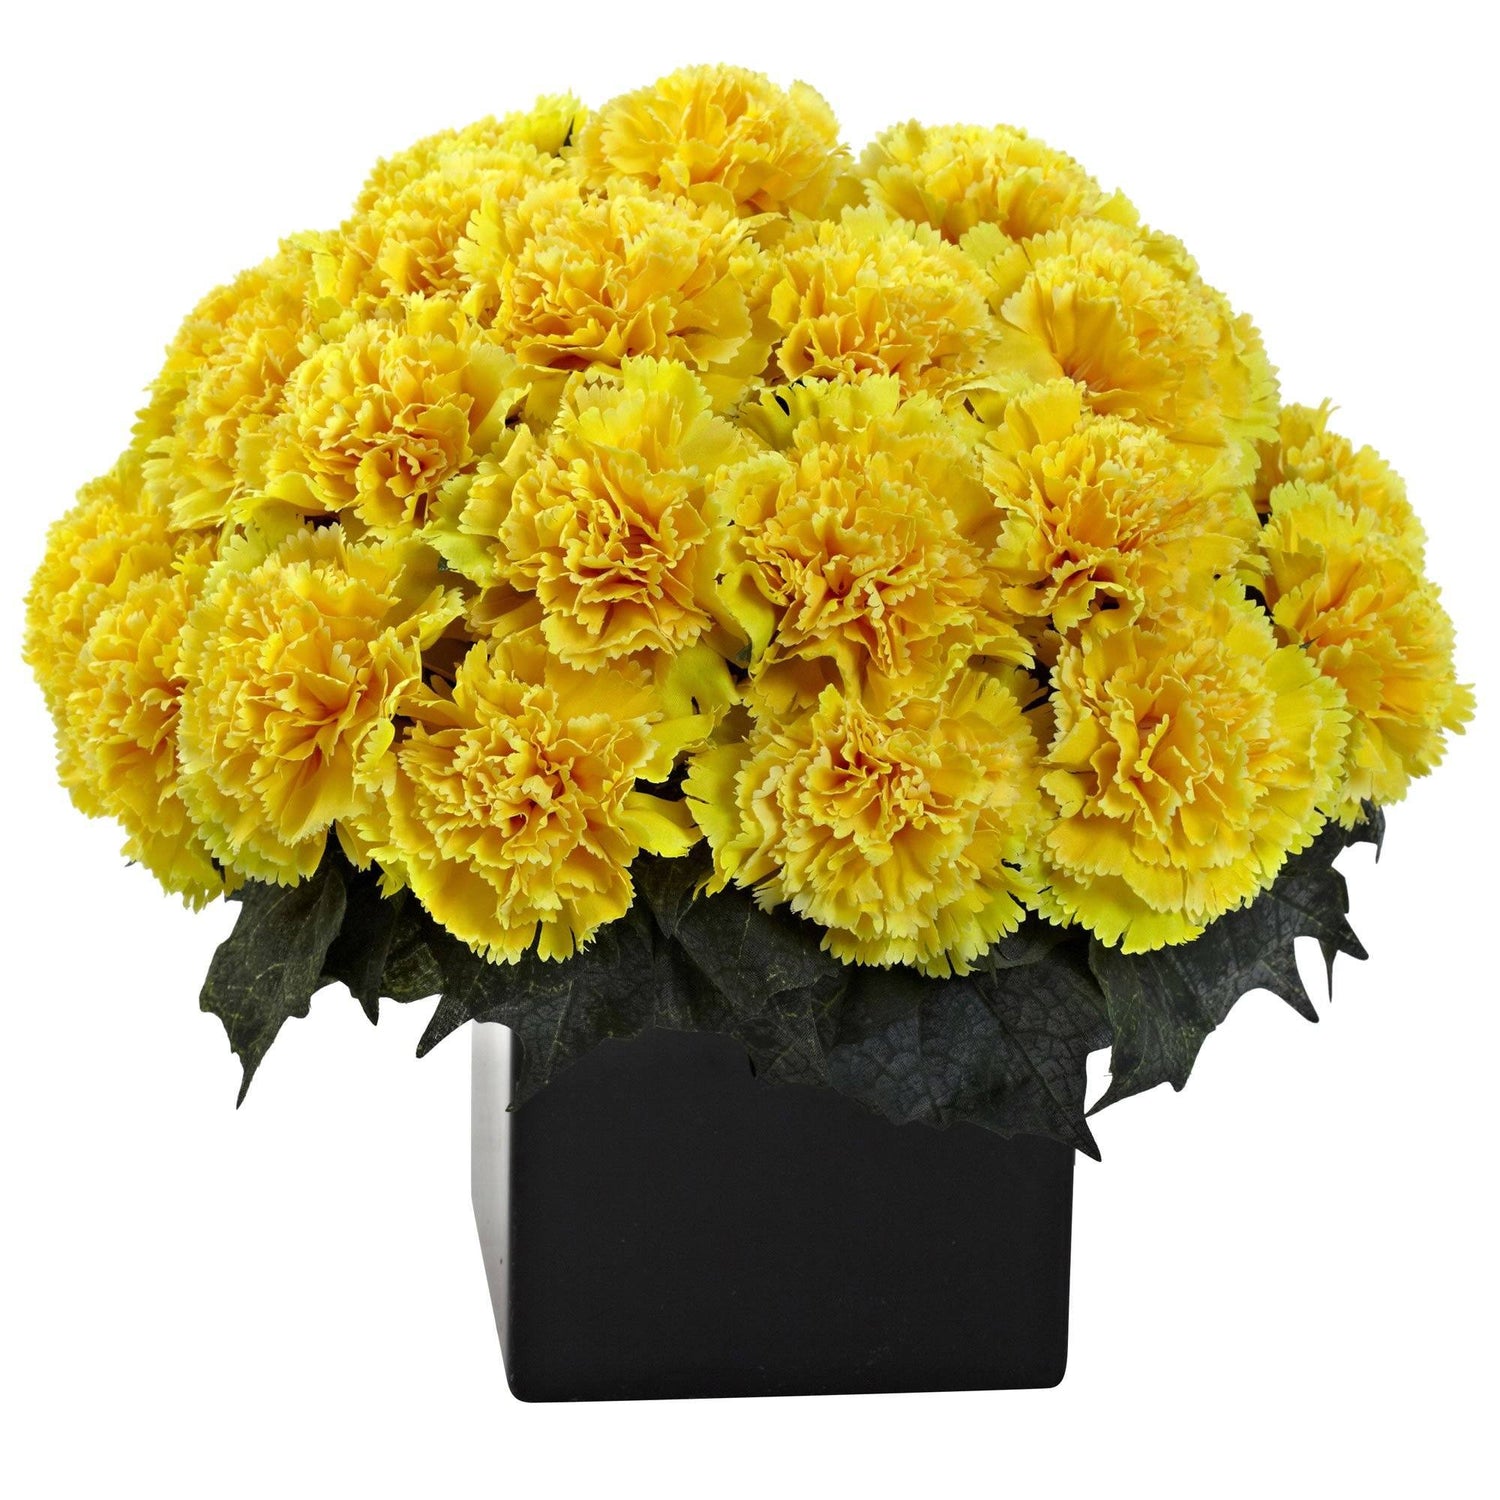 Carnation Arrangement w/Vase